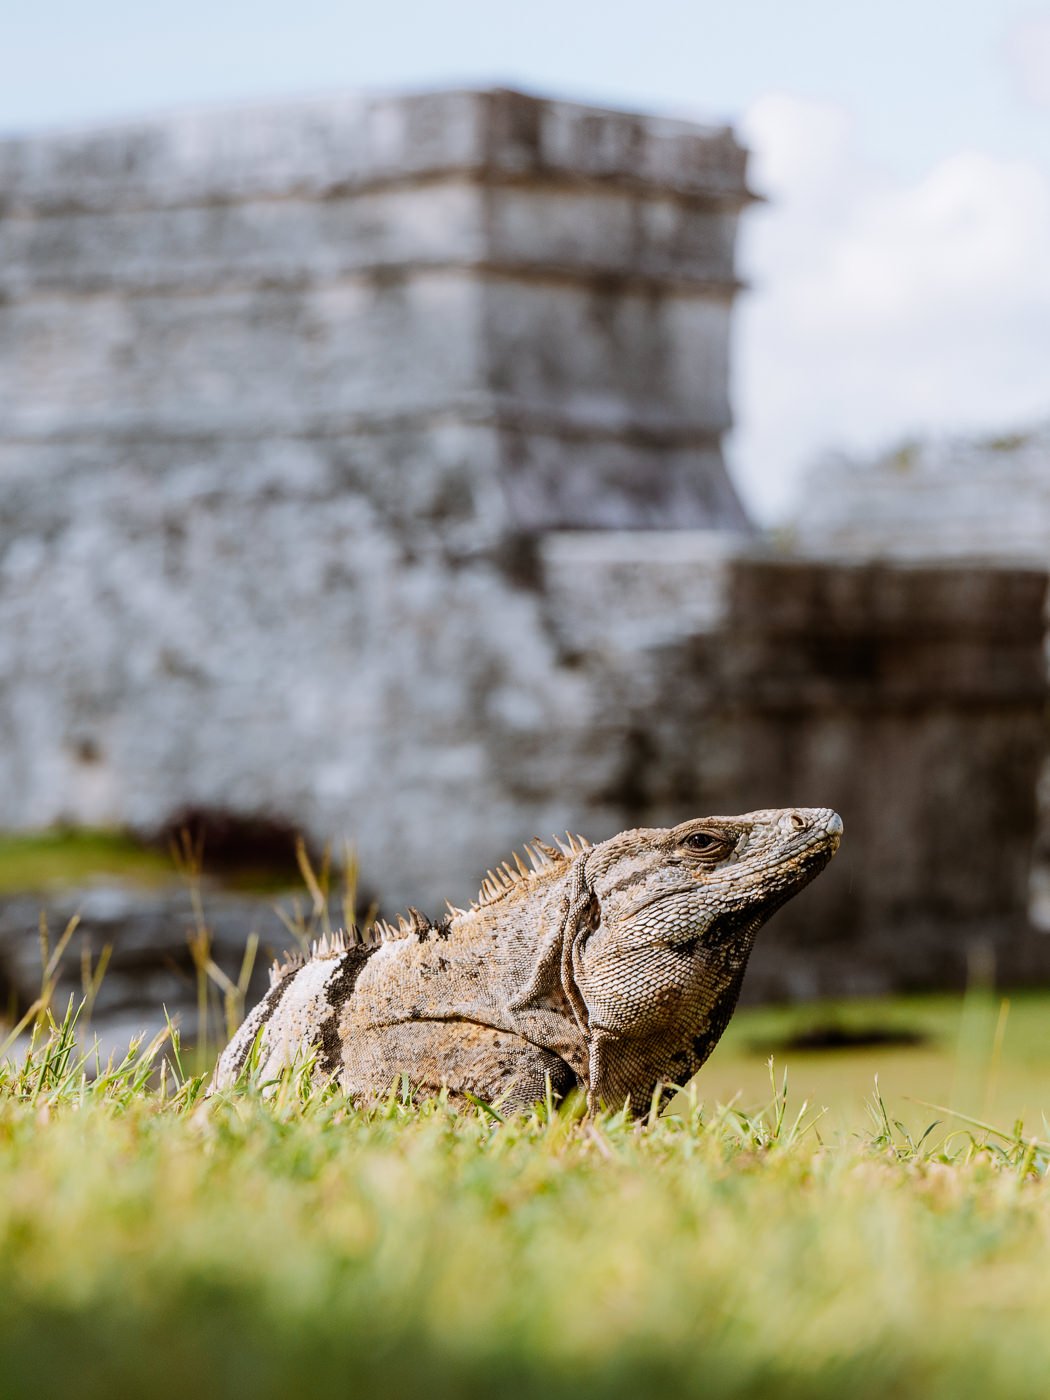 Reptile at Tulum Ruins in Mexico's Yucatan Peninsula